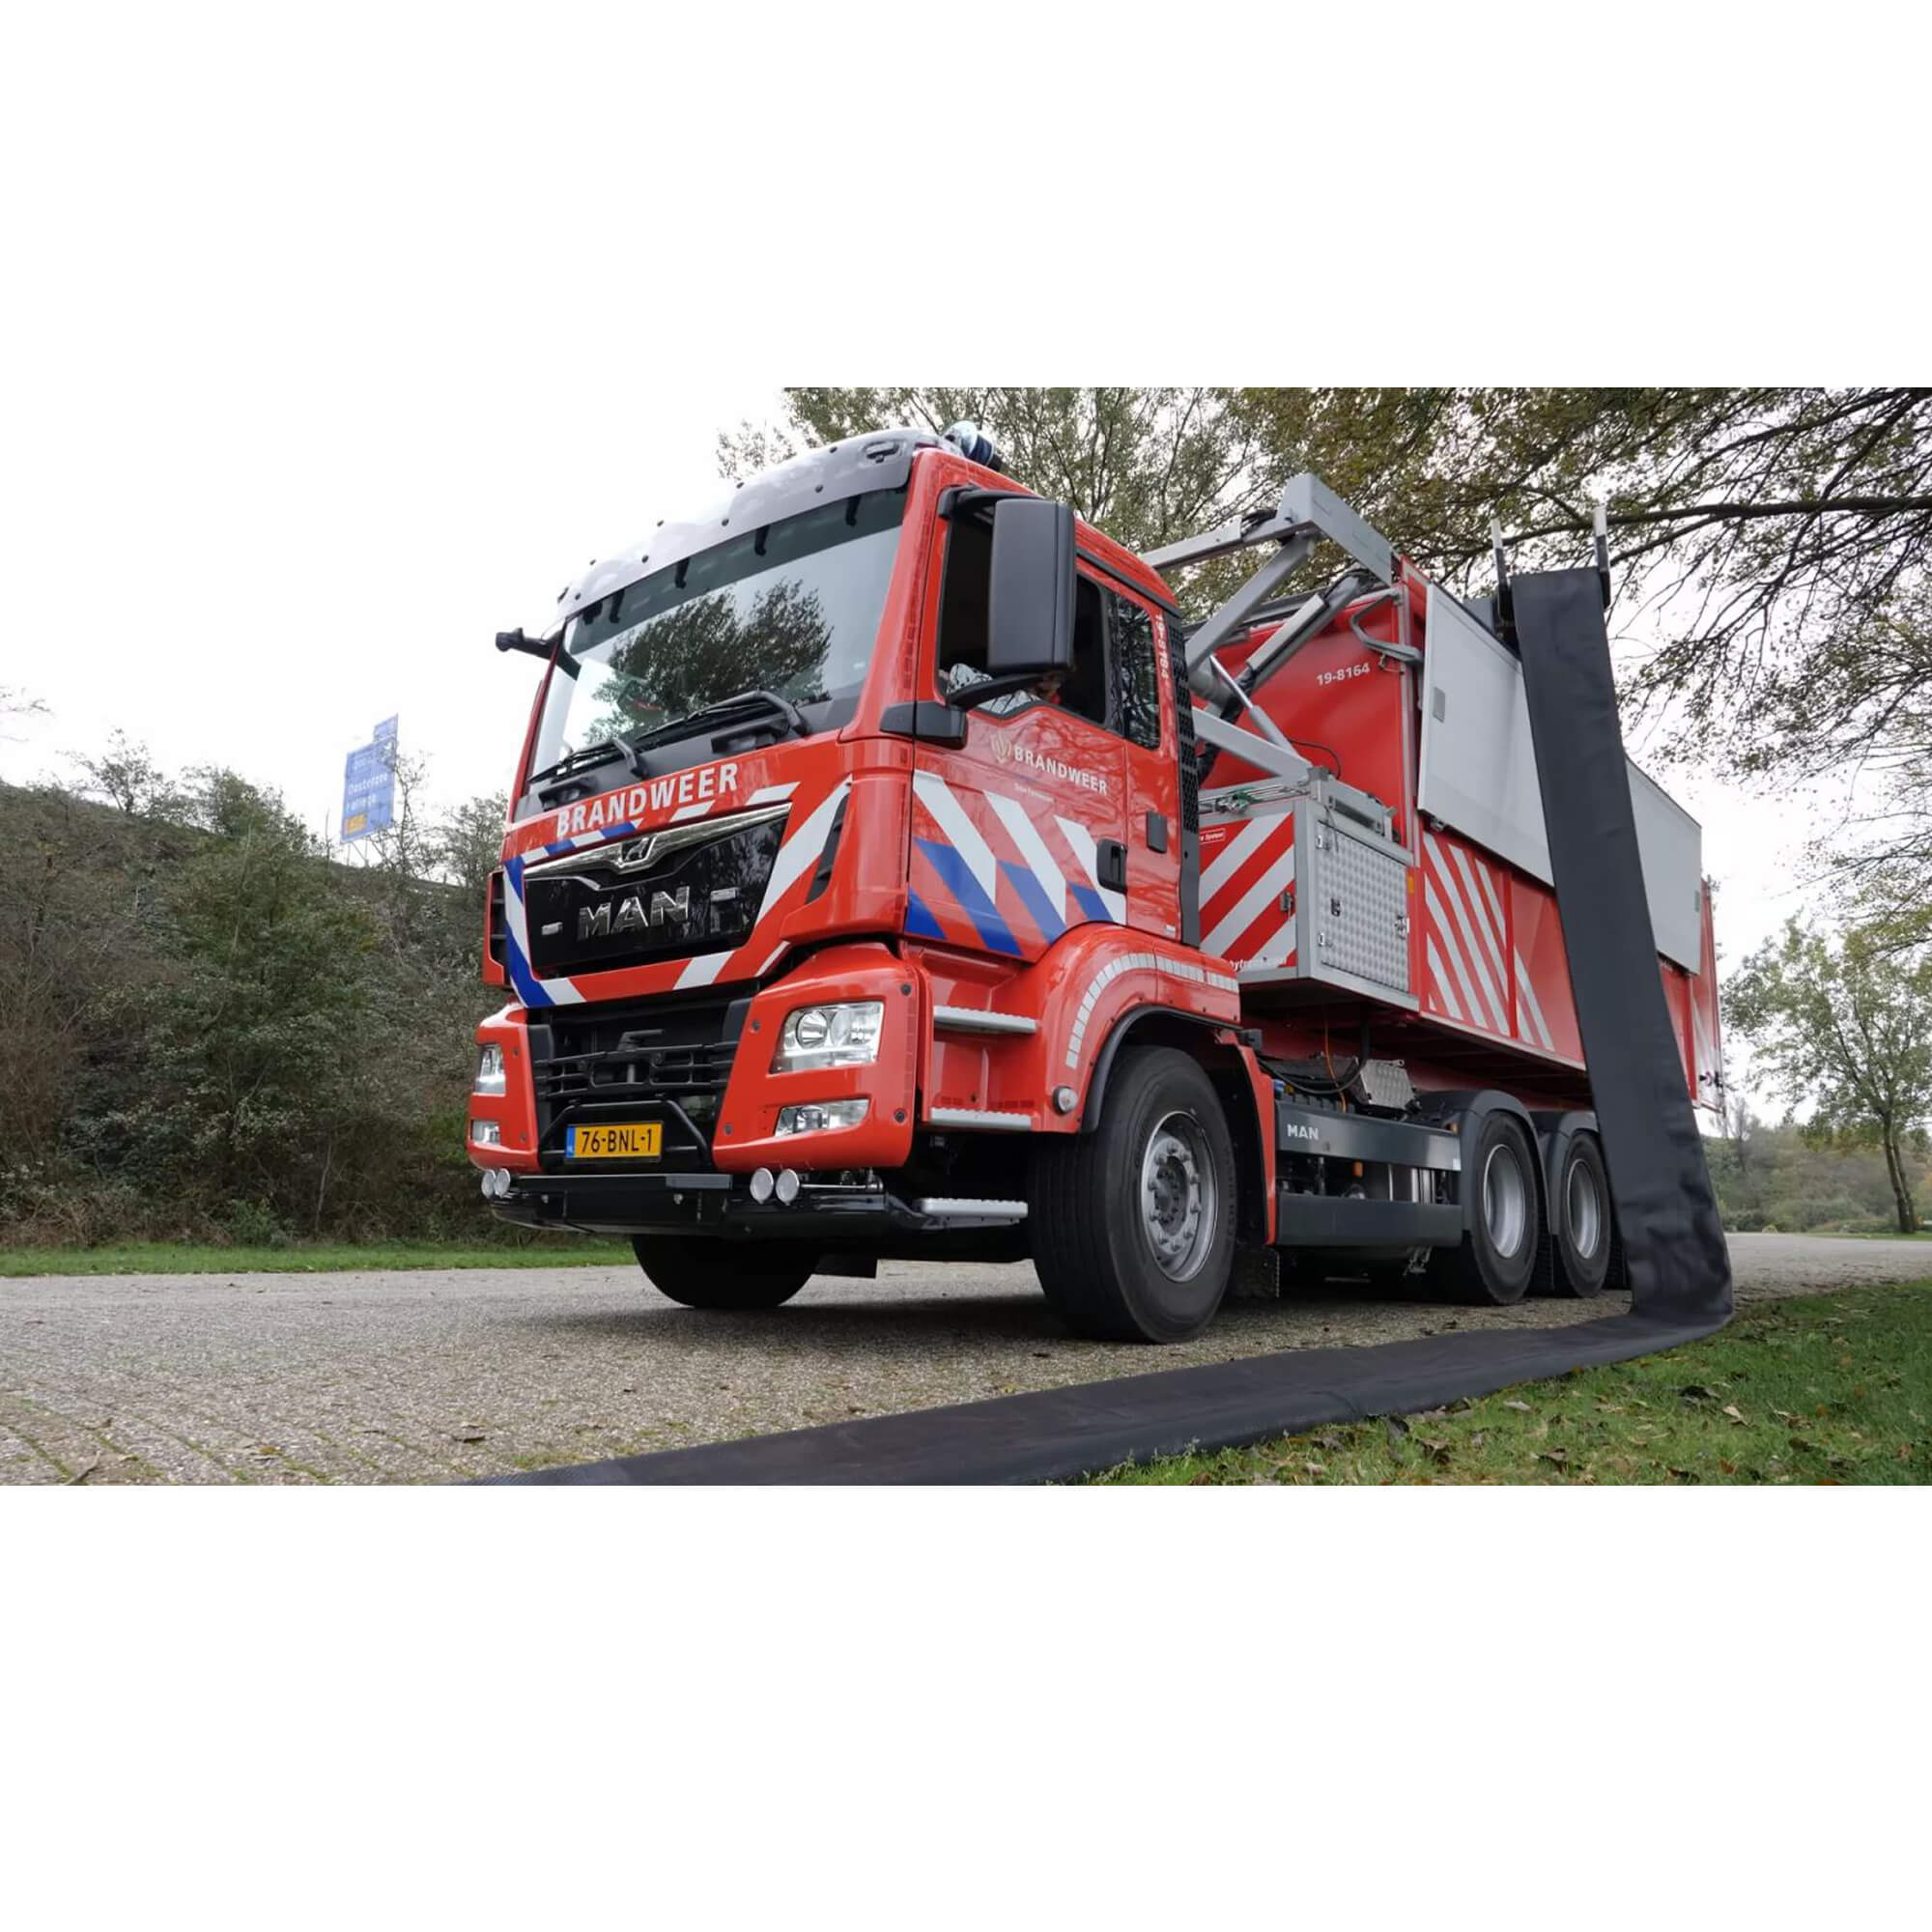 AutoFlaker Hose Handling for Fire Truck, Hytrans System